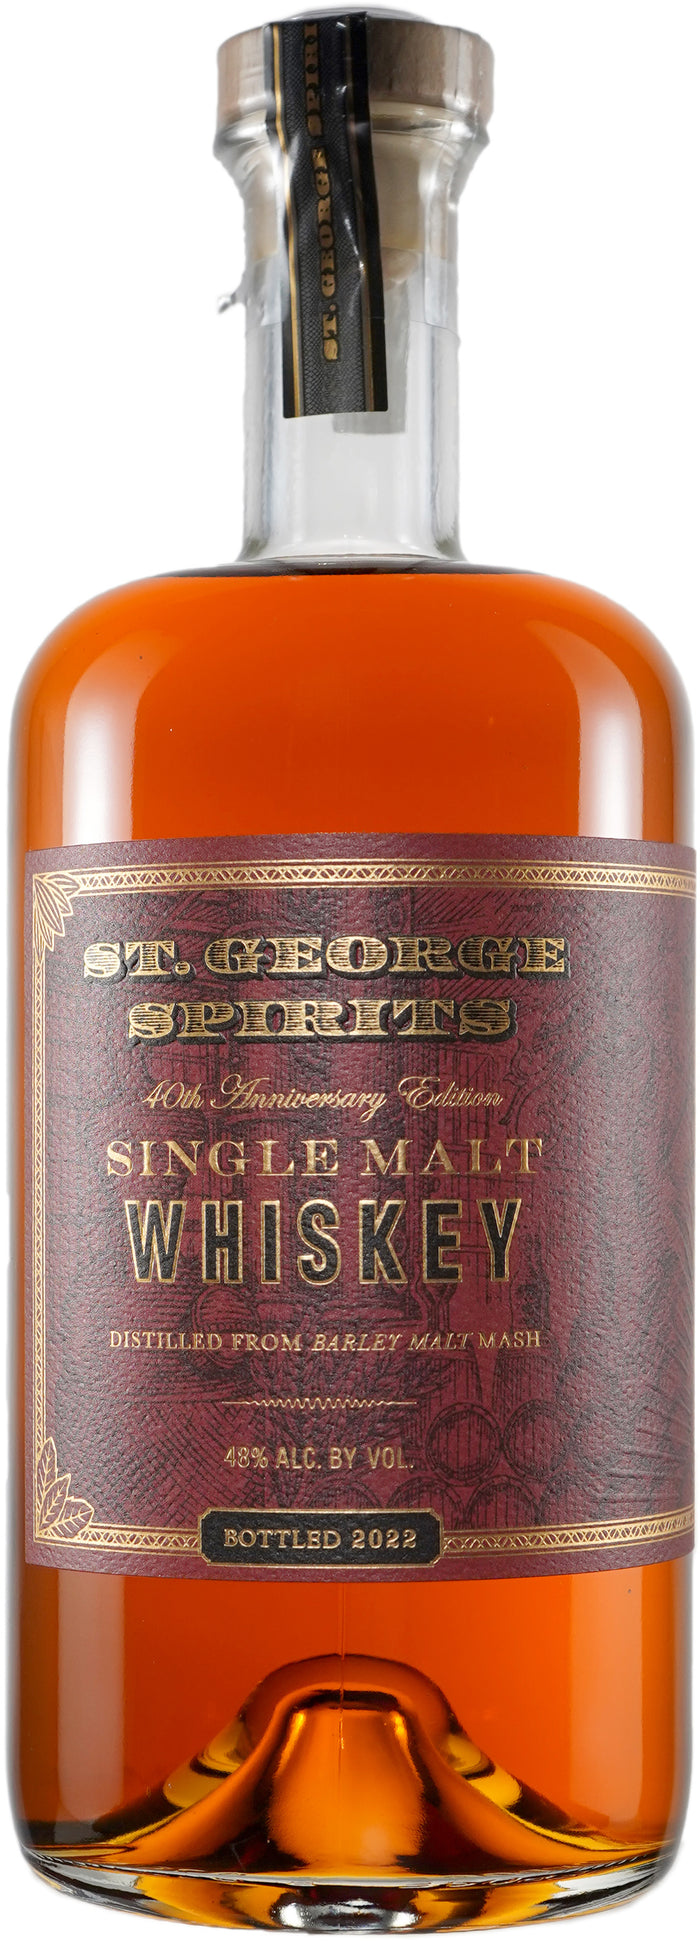 St. George 40th Anniversary Single Malt Whiskey